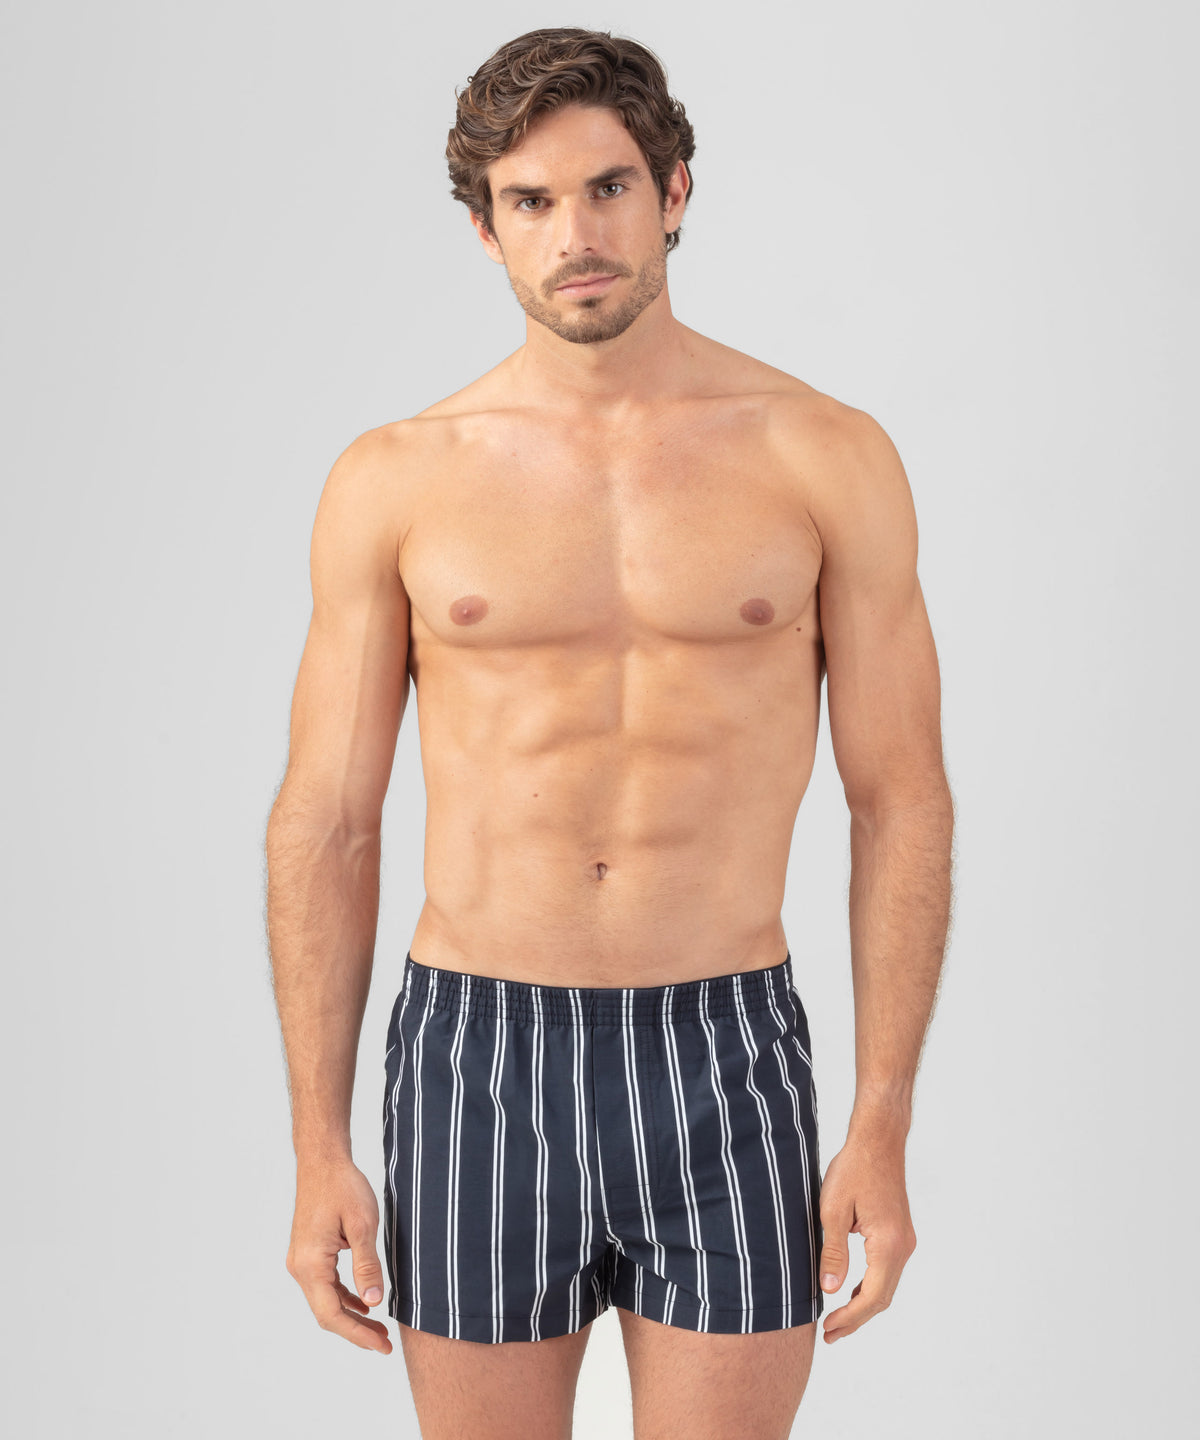 Boxer Shorts w. Double Stripes: Navy